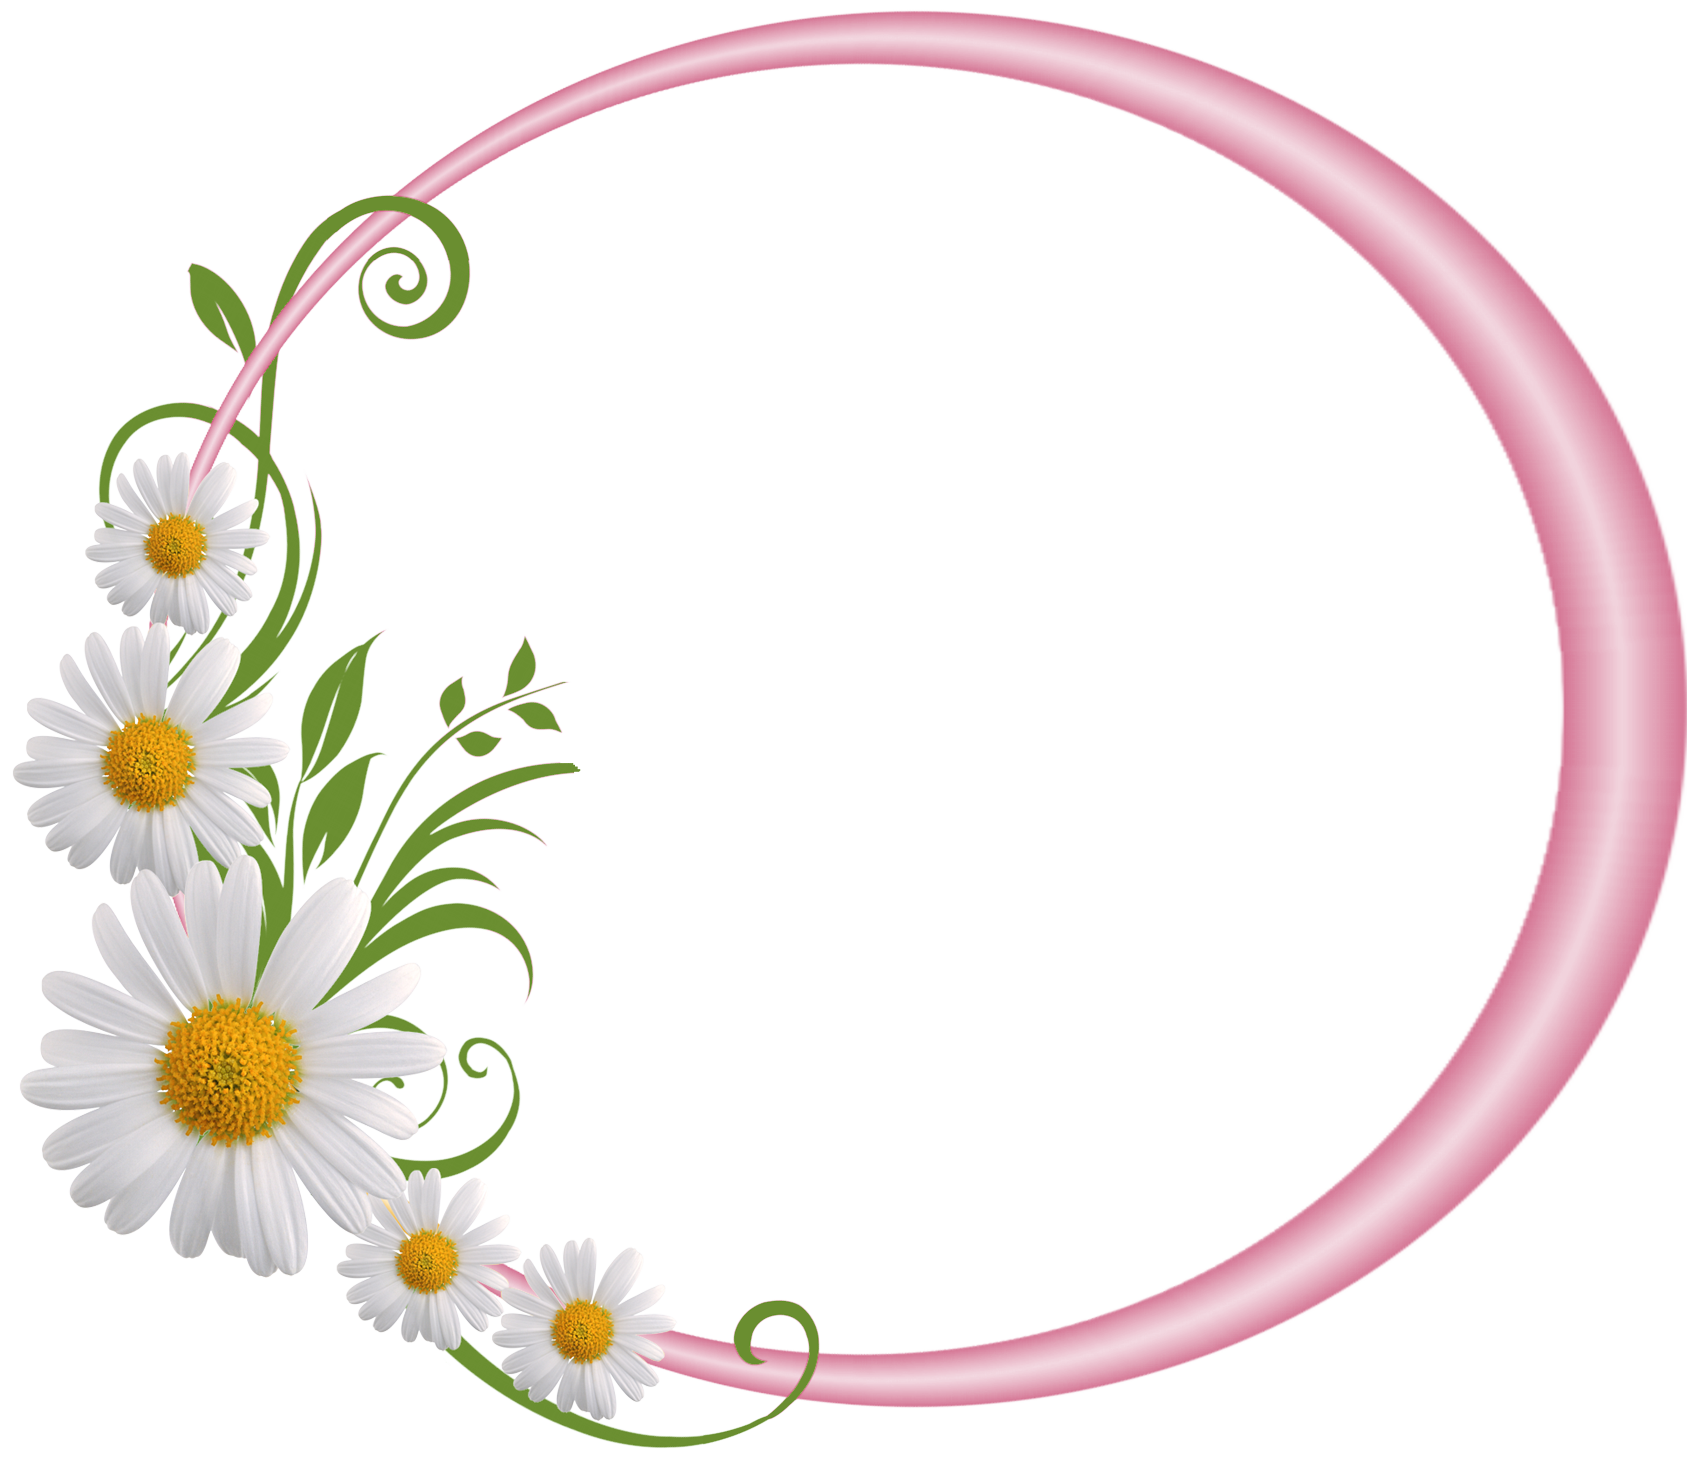 Download PNG image - Floral Round Frame PNG File 